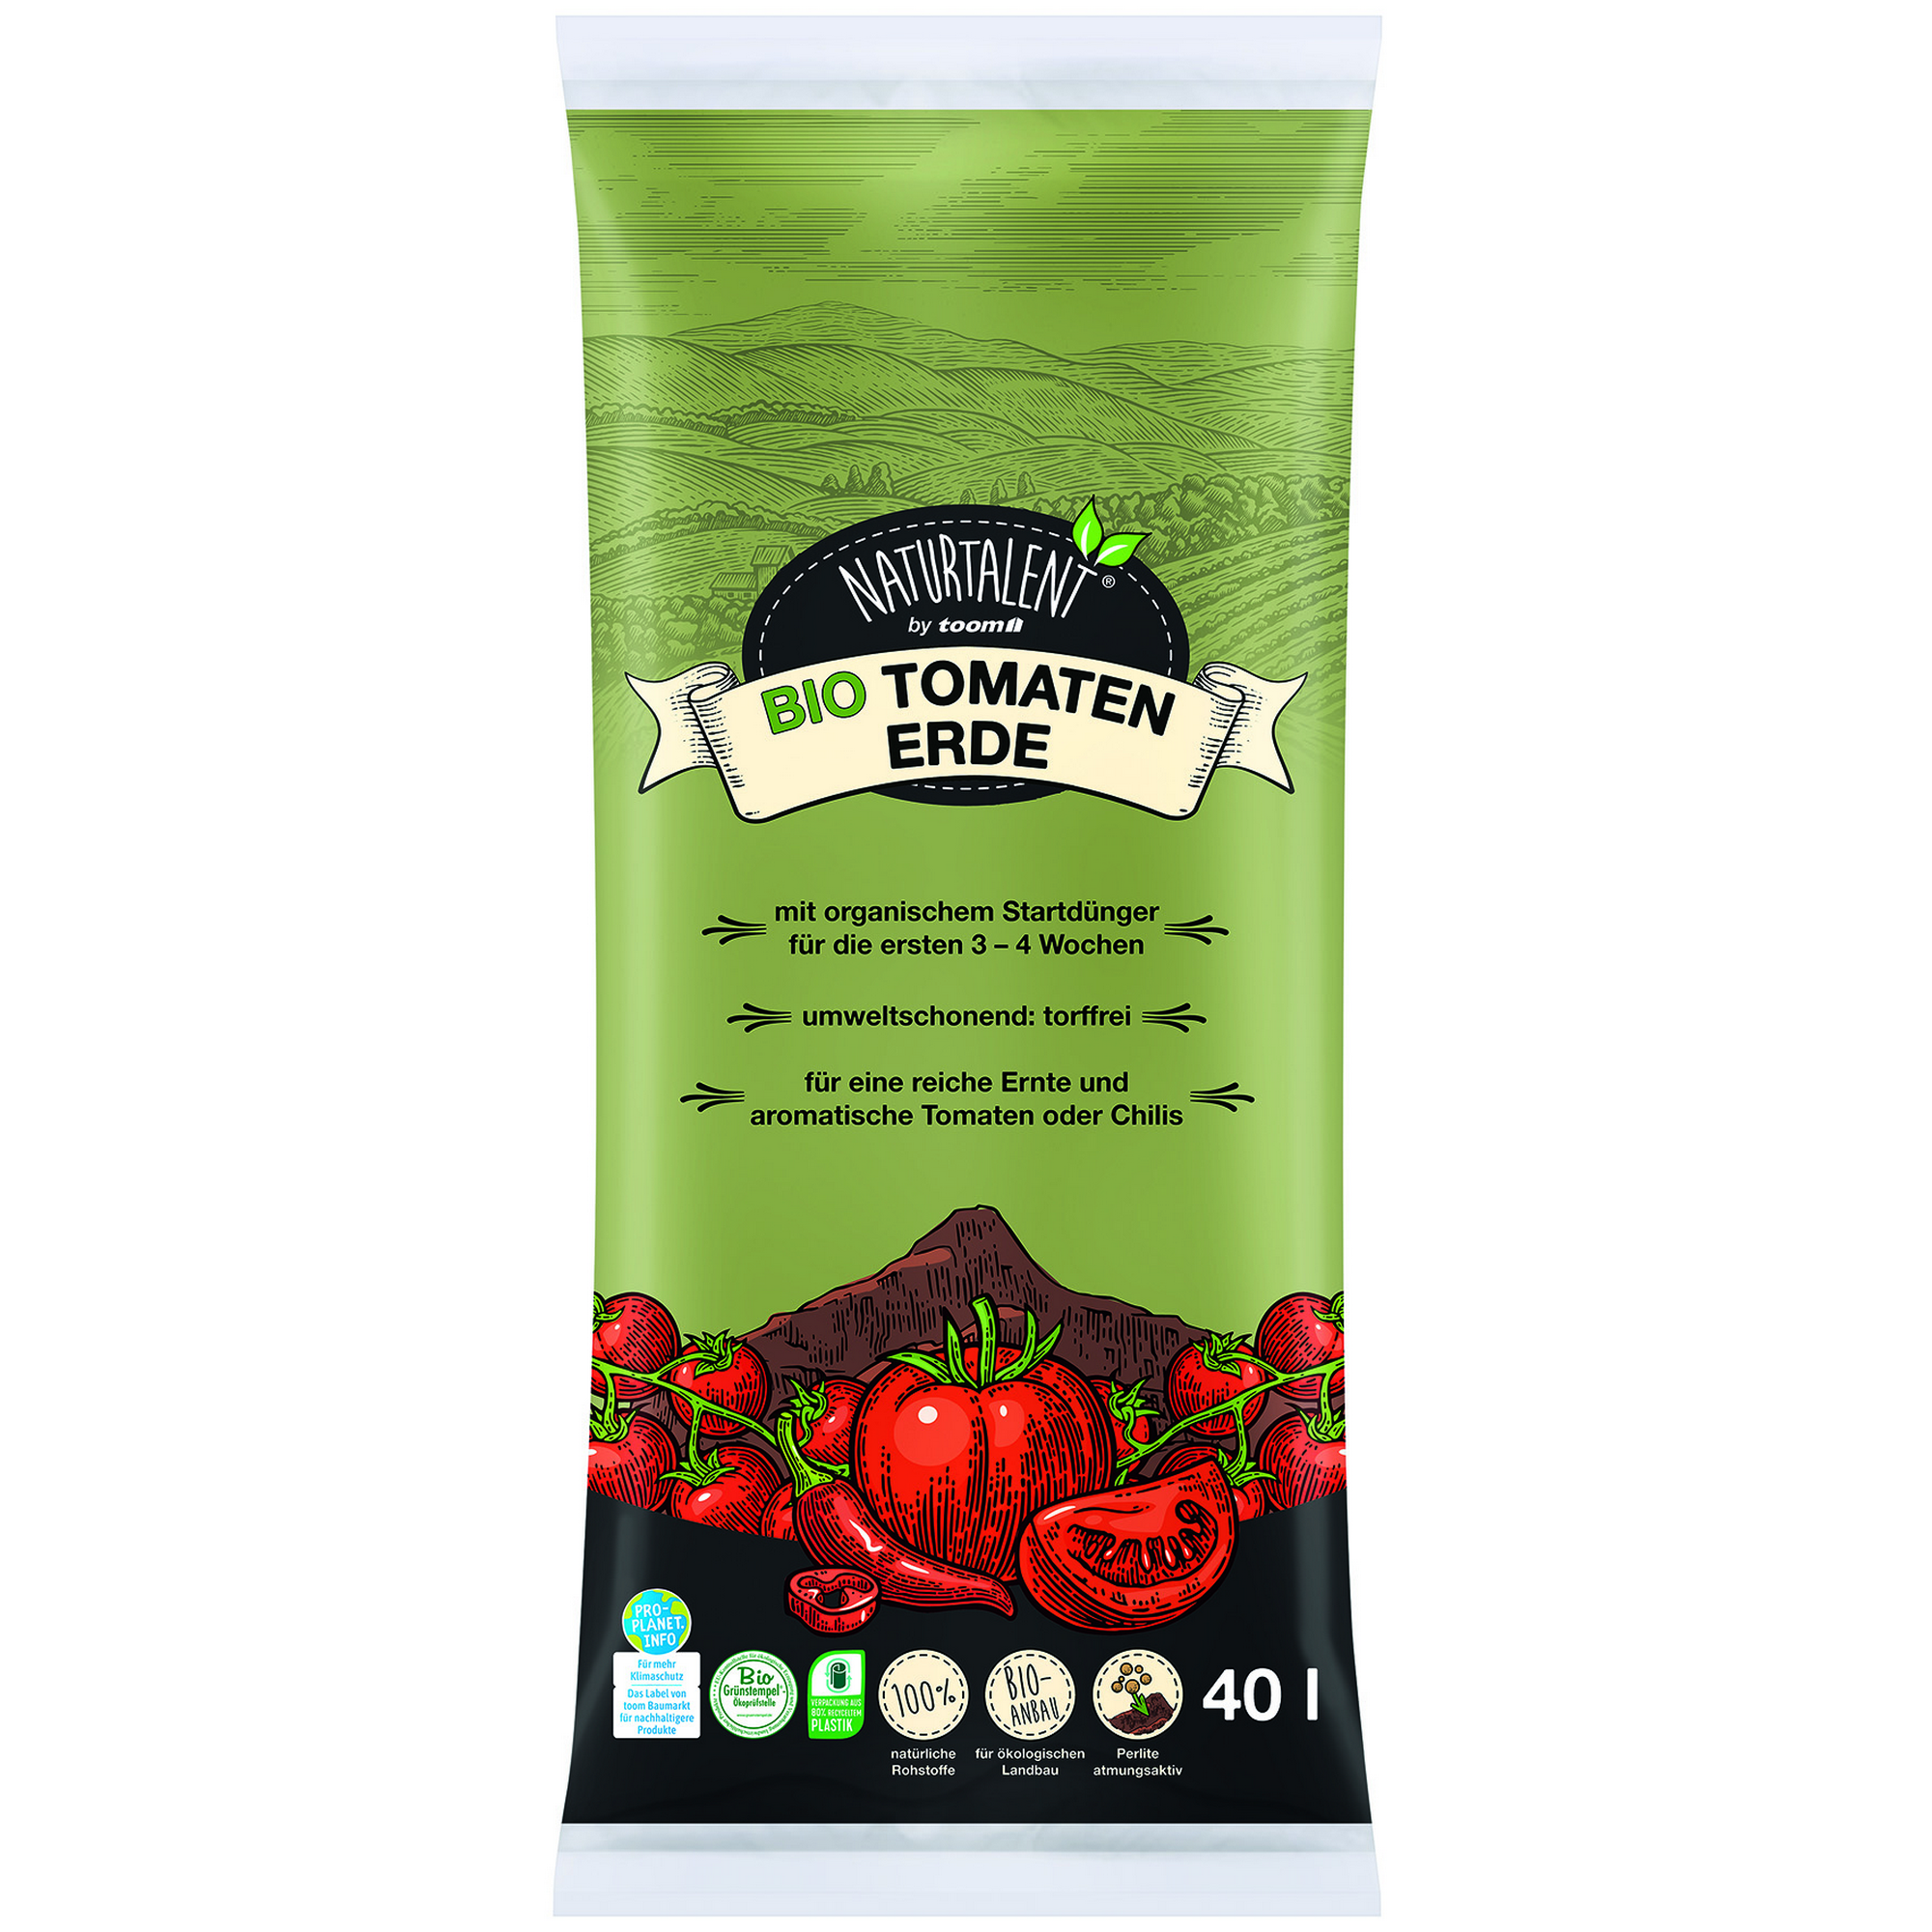 Bio-Tomatenerde 'Naturtalent' 40 l + product picture